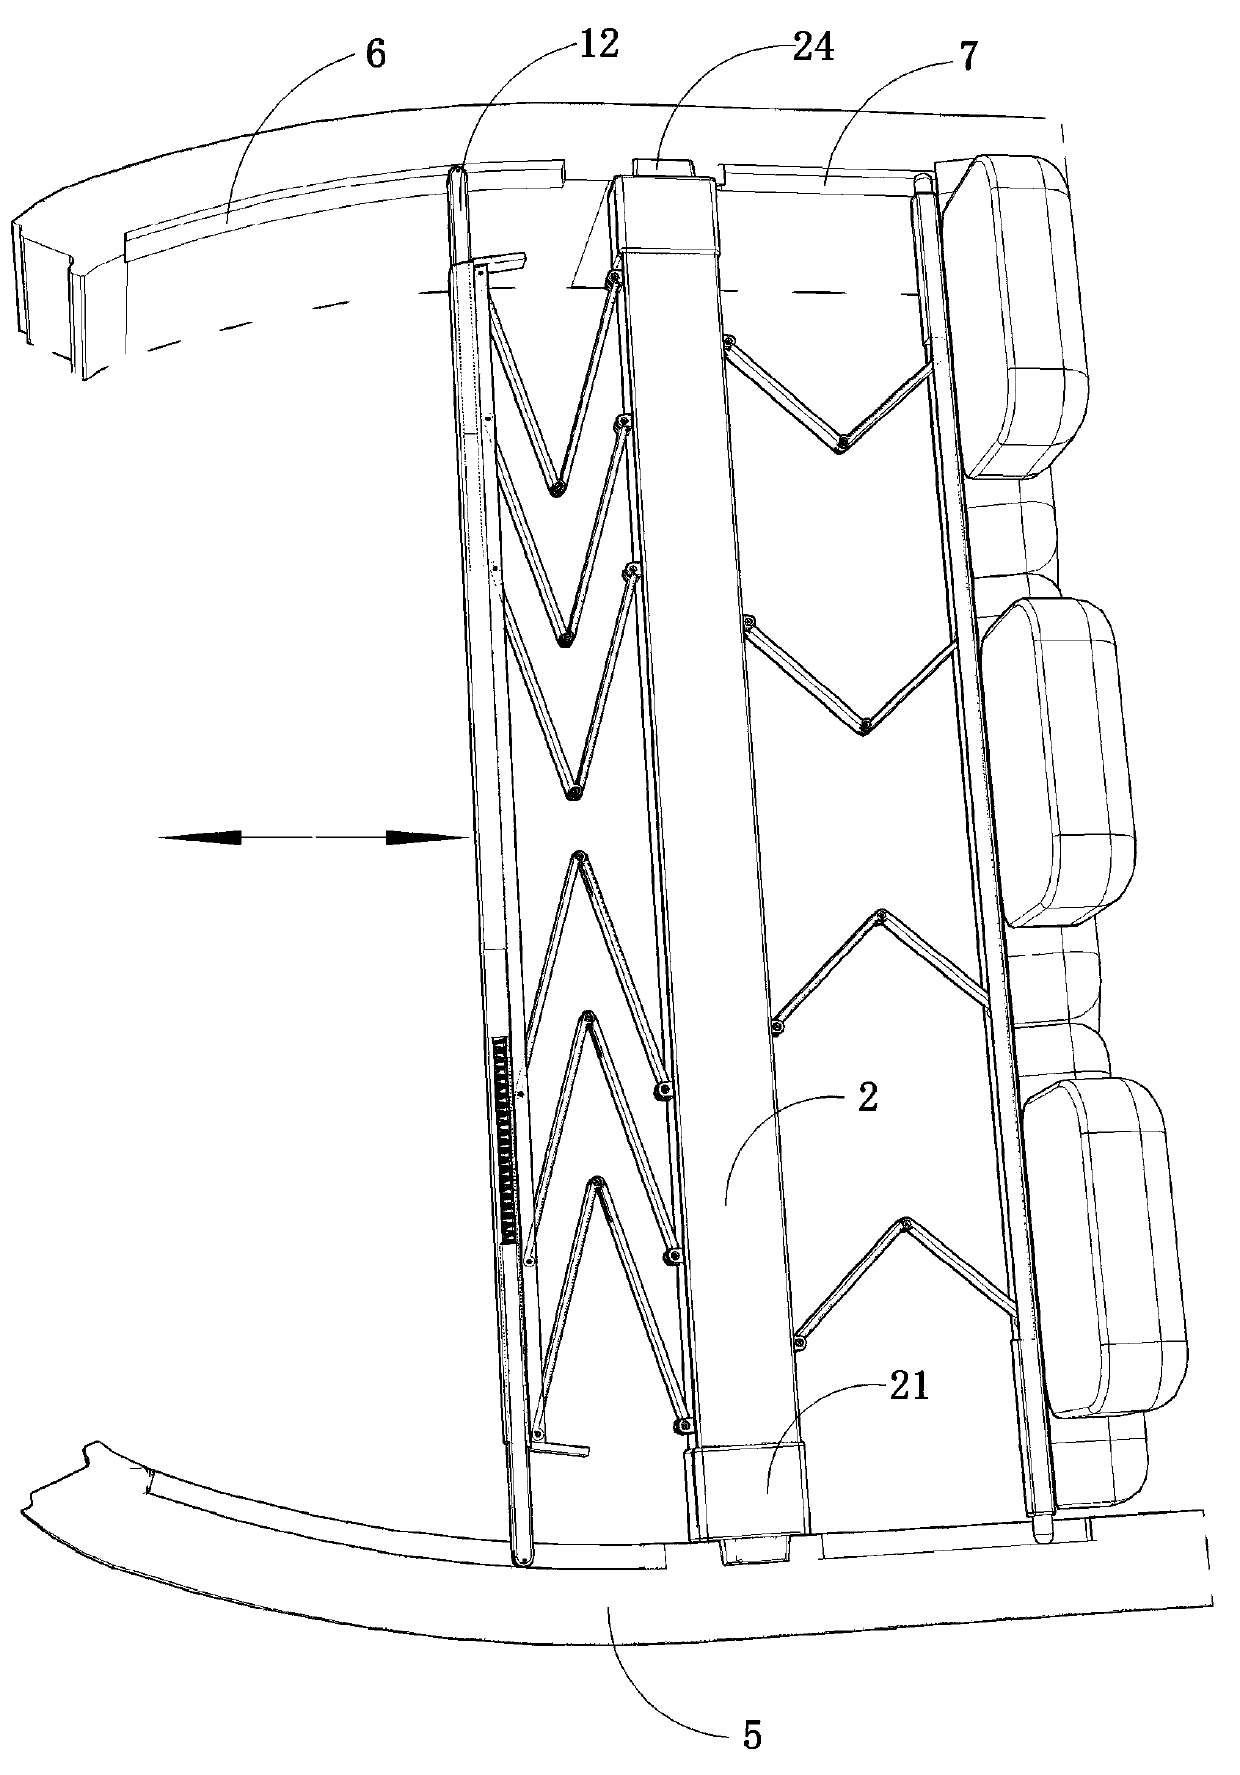 Guide rail type shielding curtain